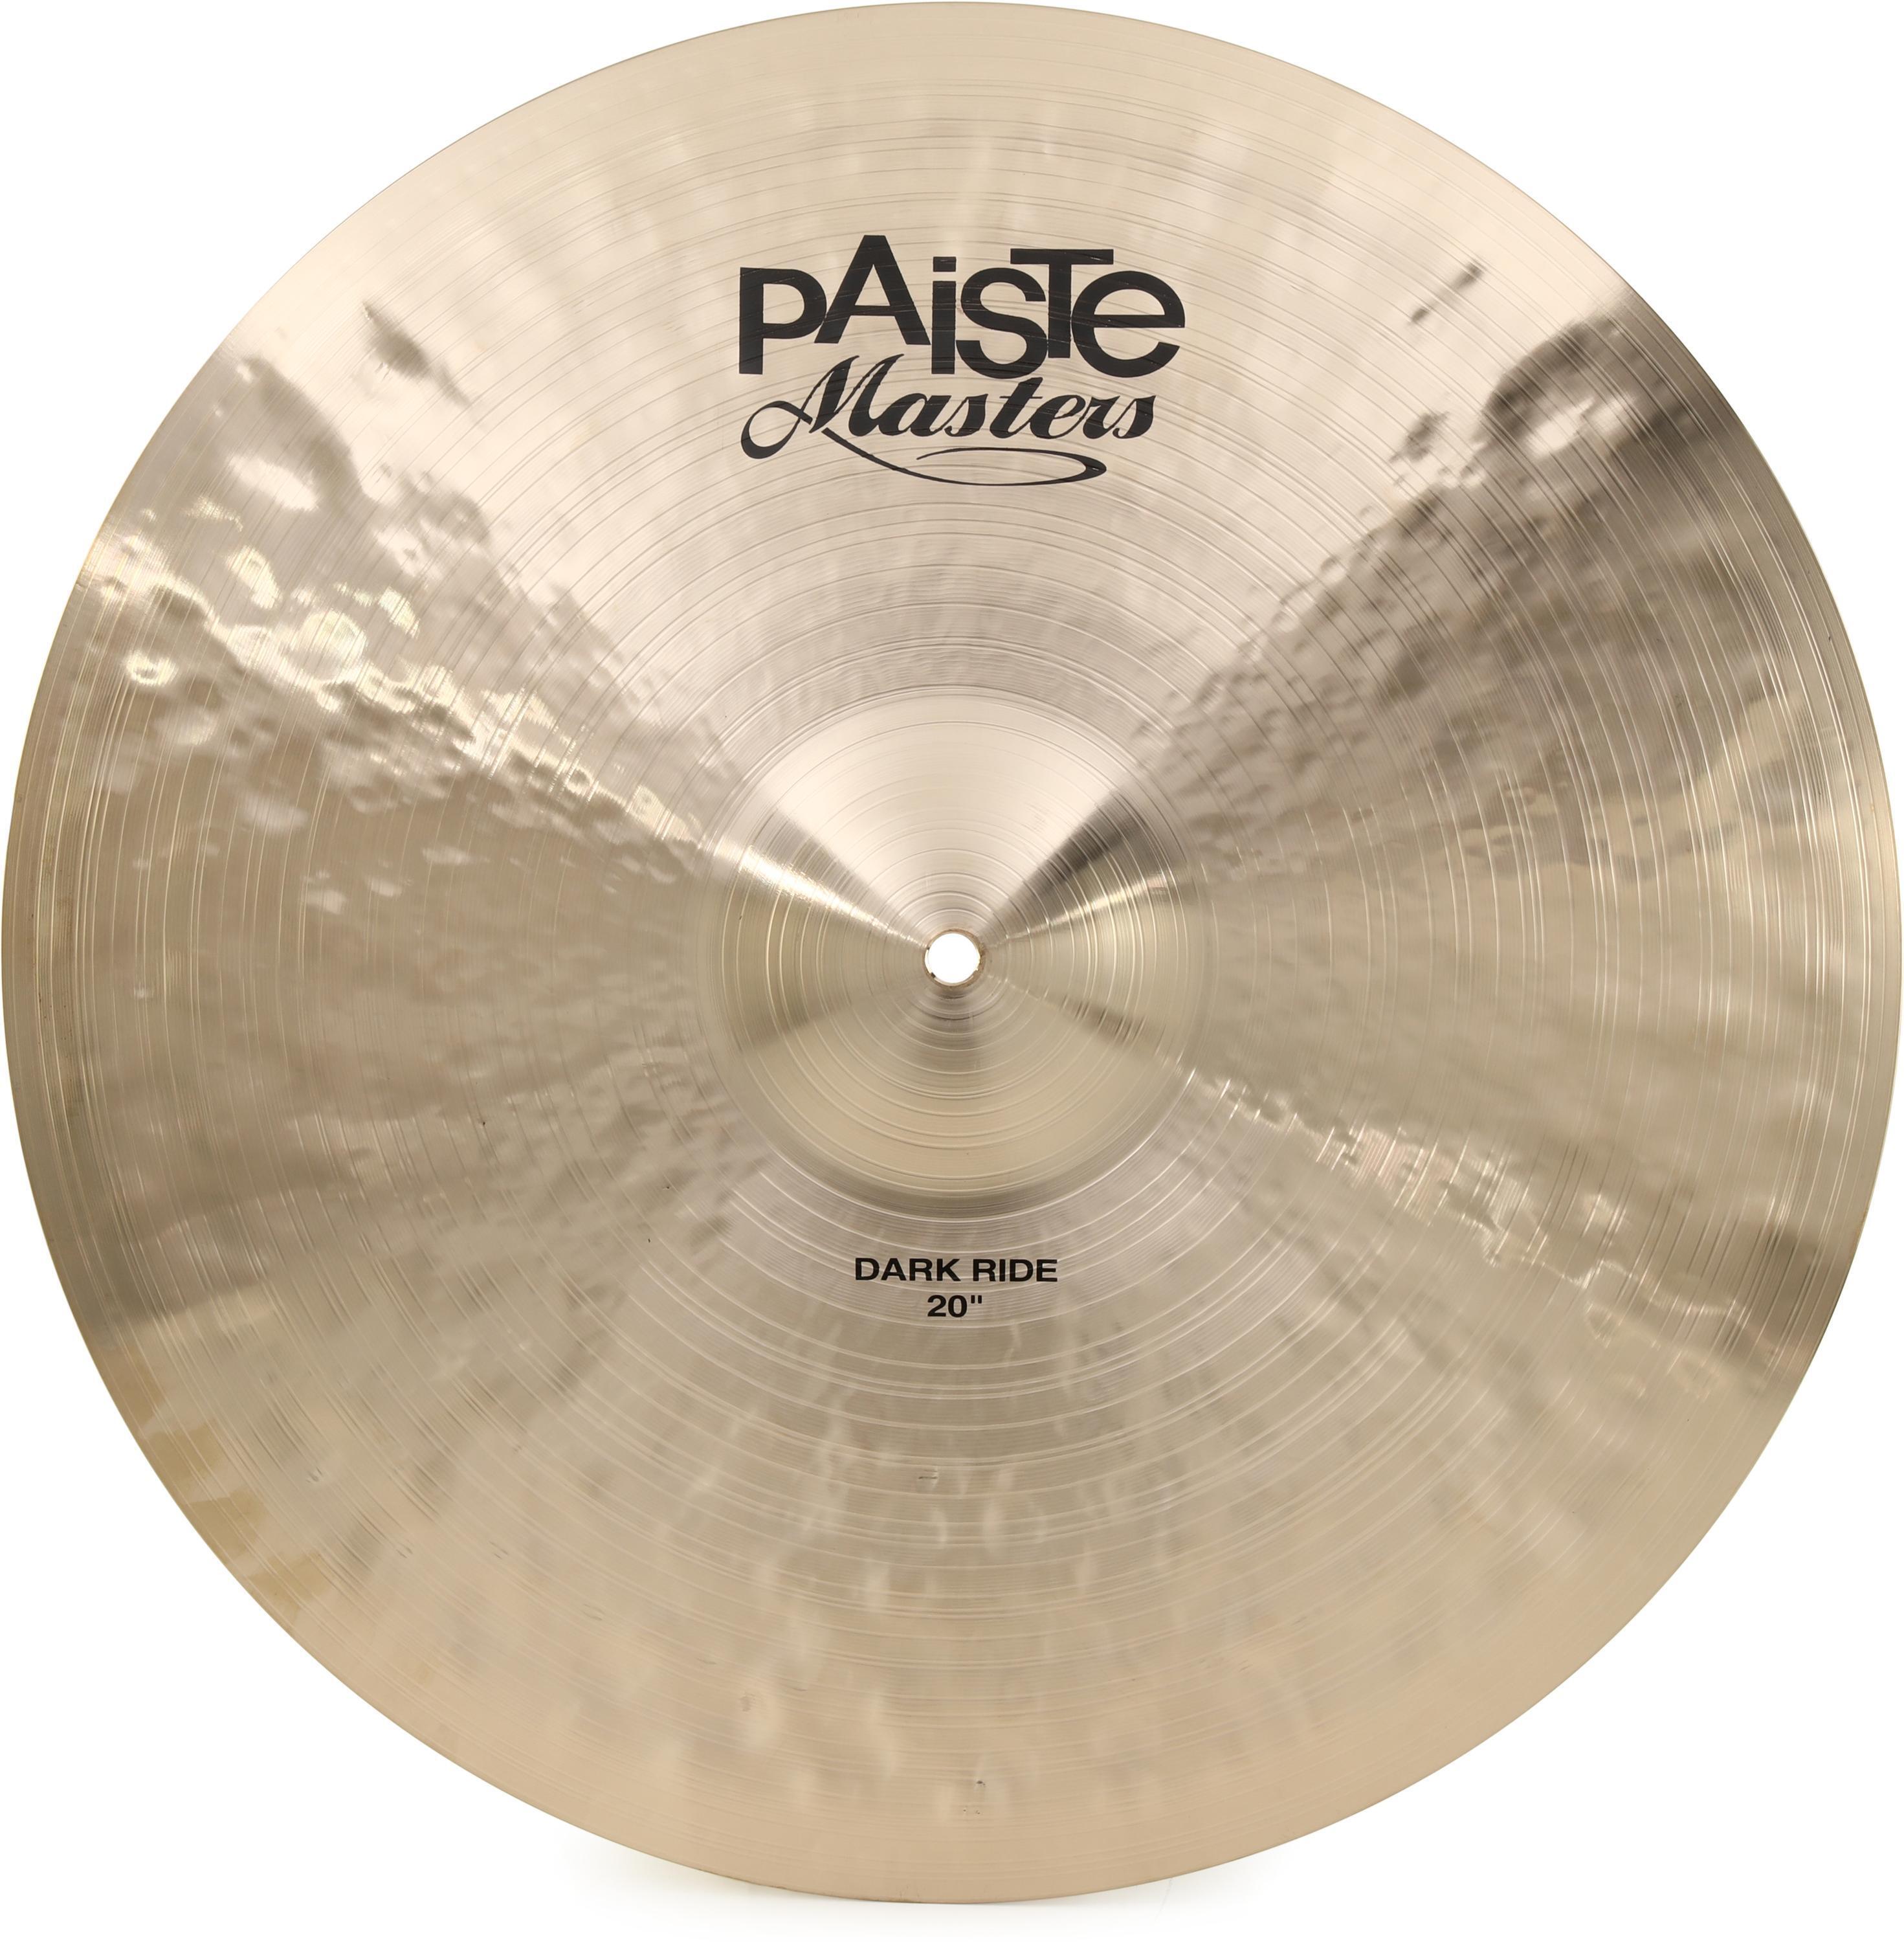 Paiste Masters Dark Ride Cymbal - 20 inch